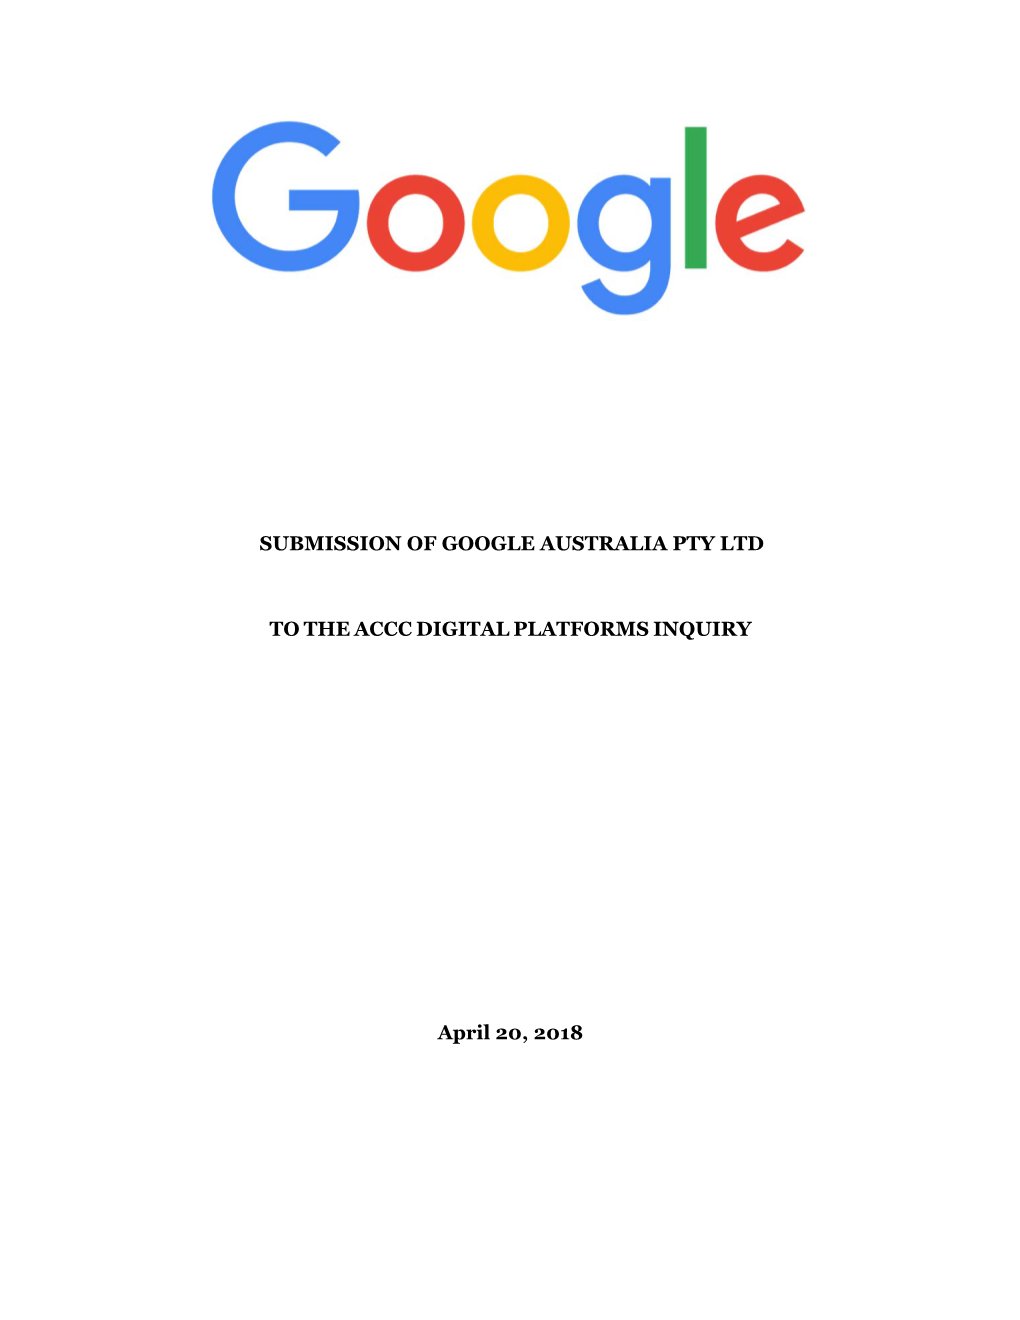 Submission of Google Australia Pty Ltd To